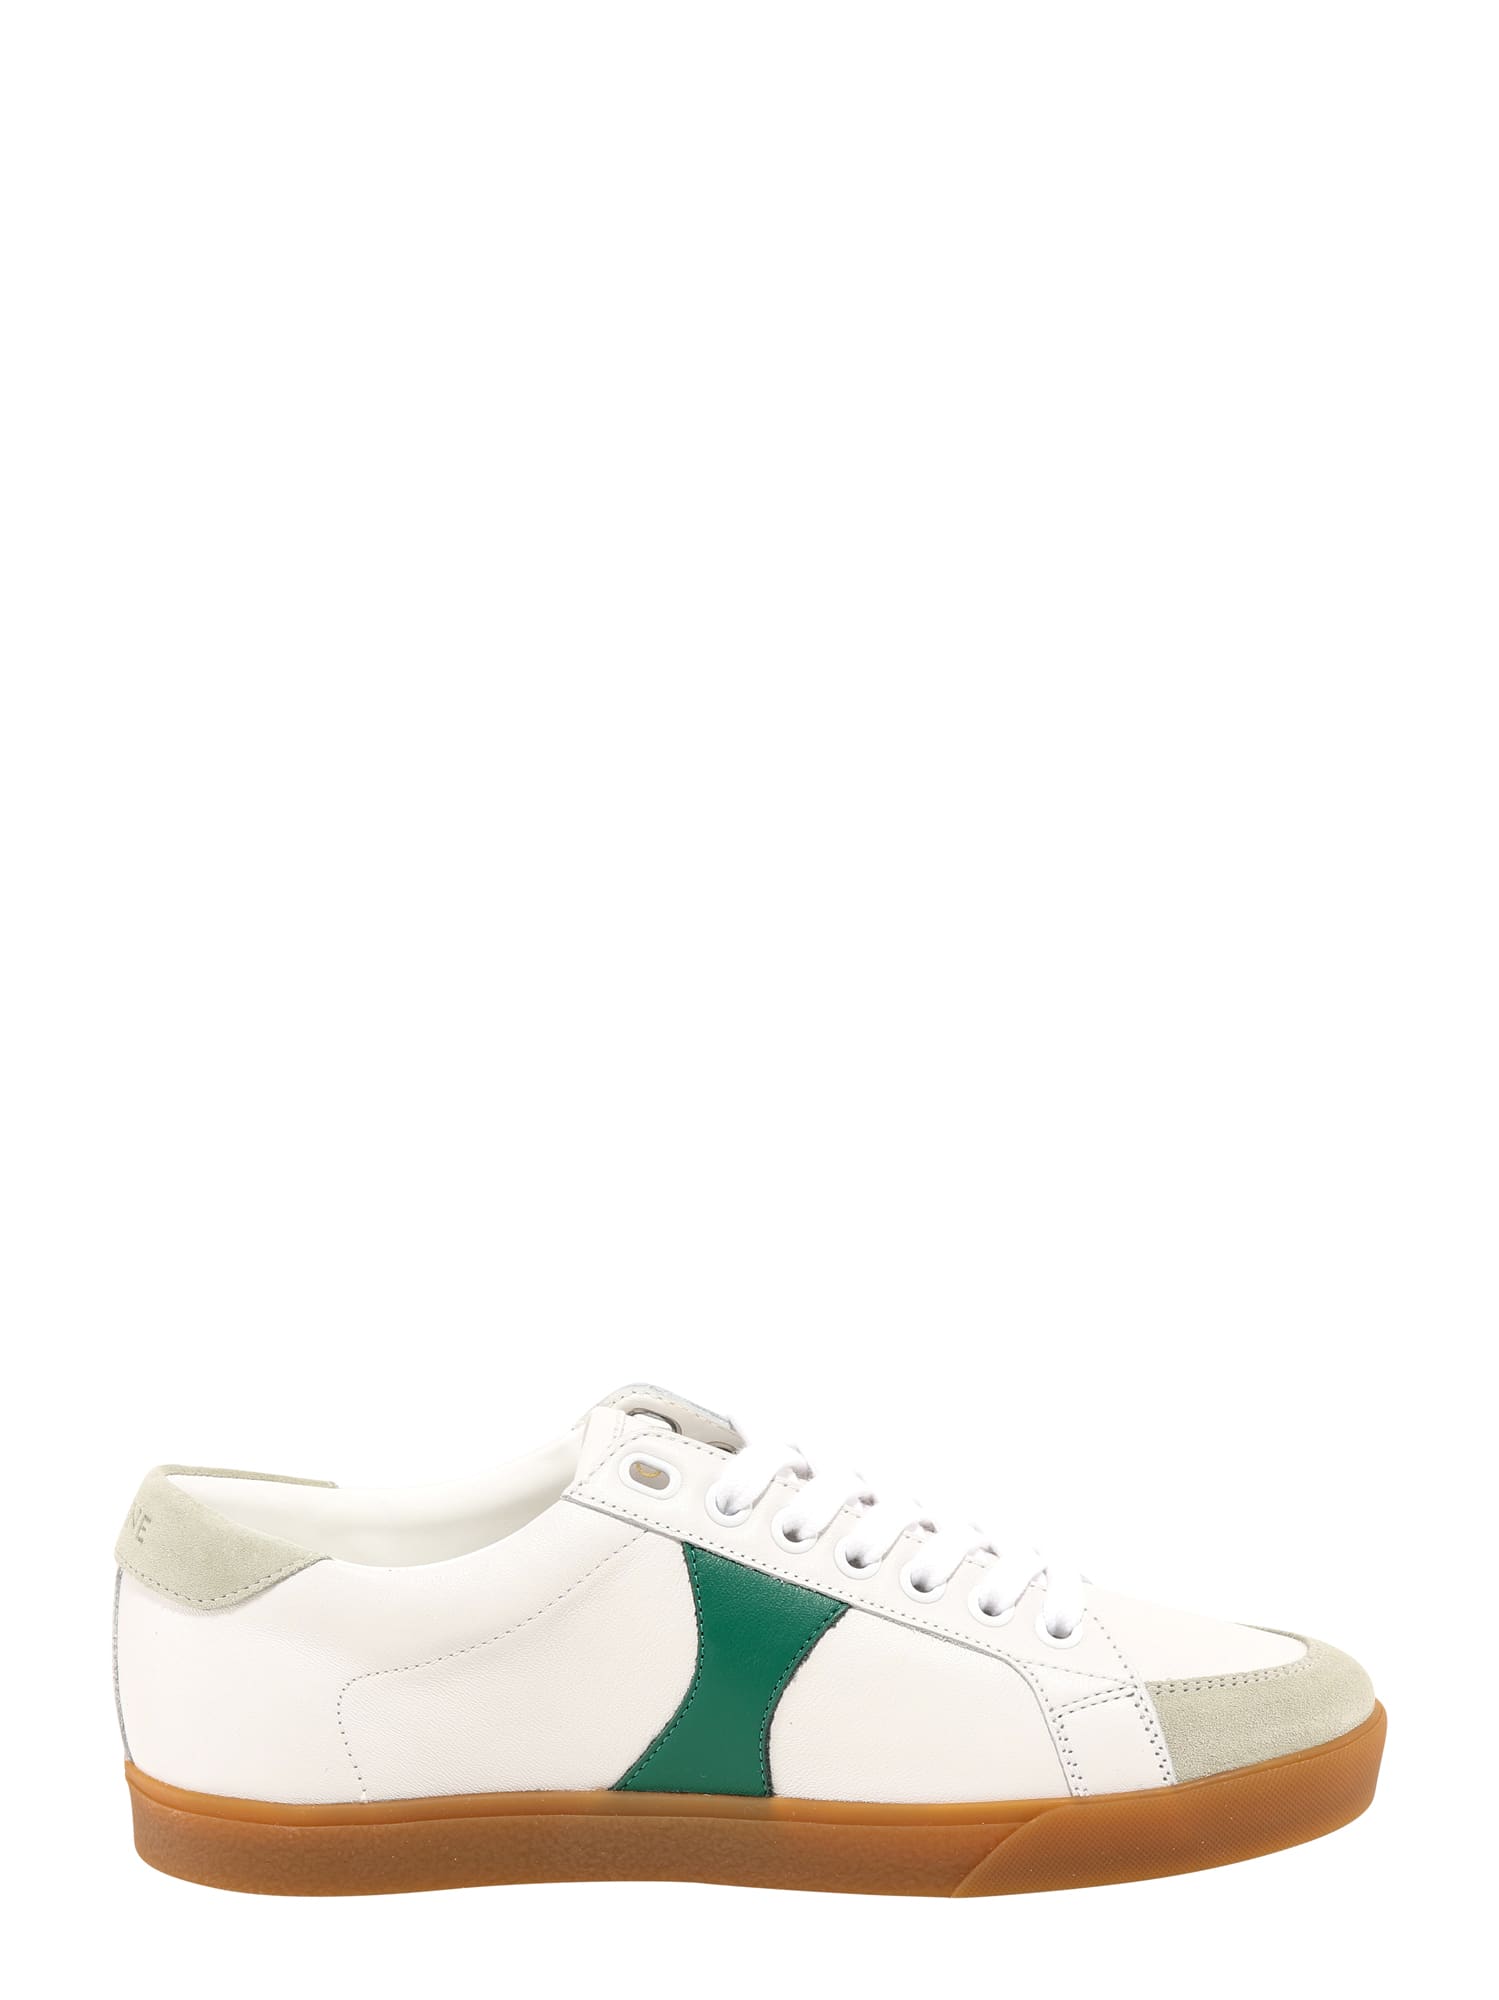 Celine Sneakers In We White Green